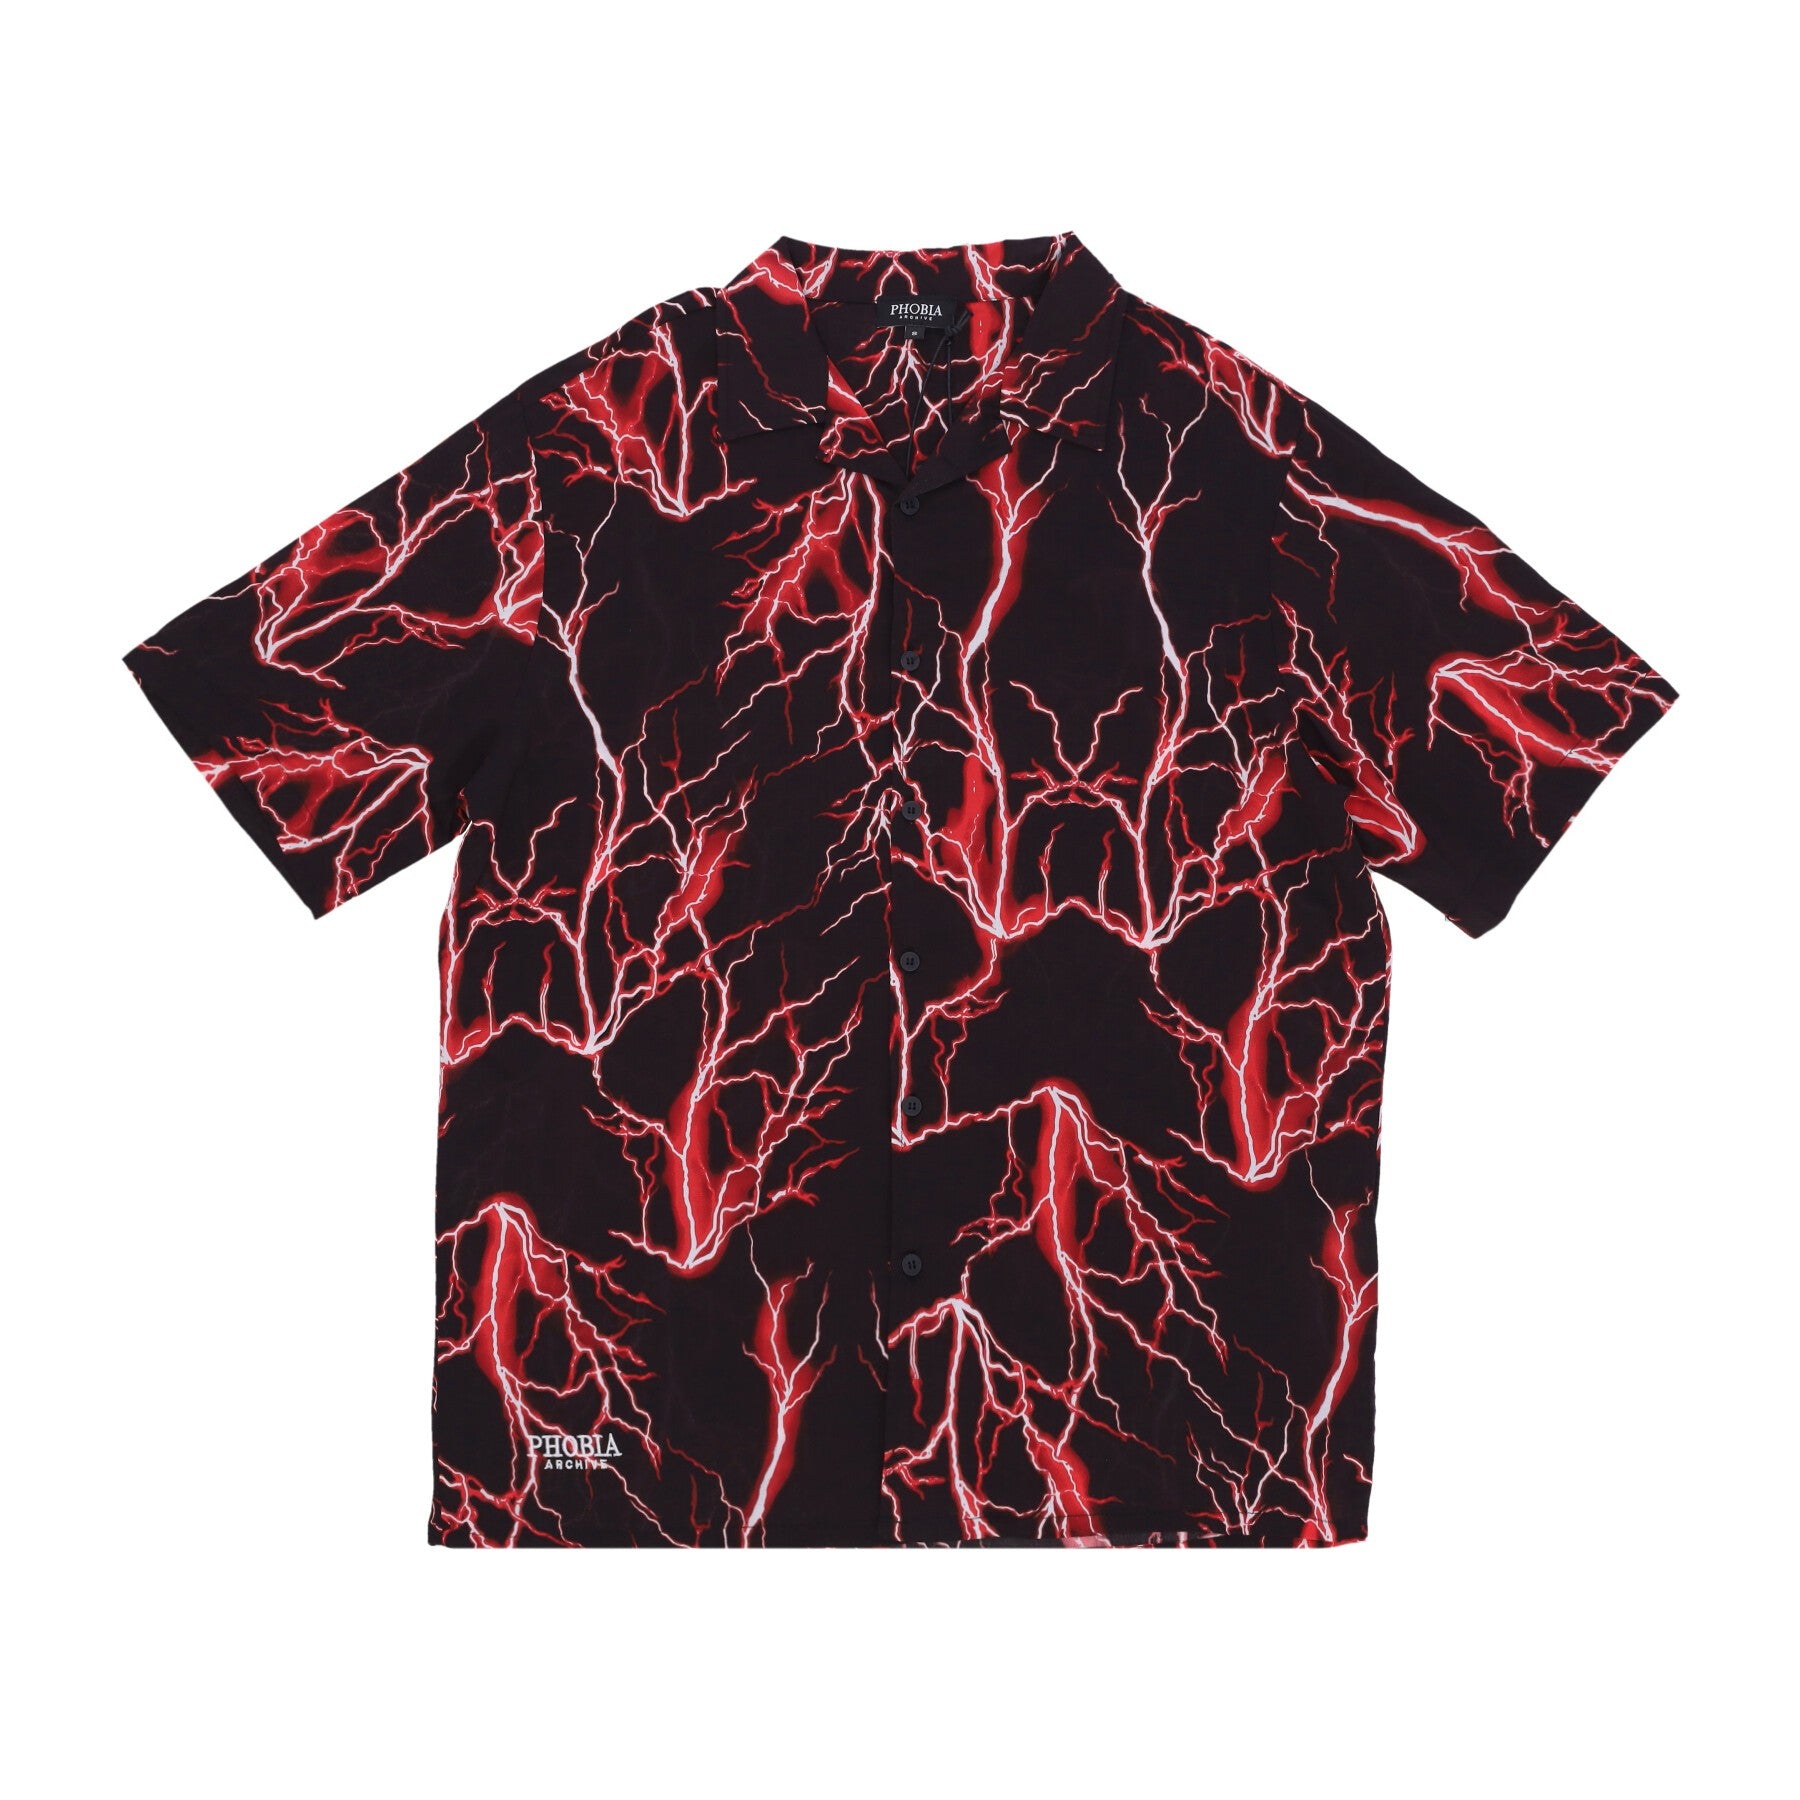 Phobia, Camicia Manica Corta Uomo All Over Lightning Shirt, Black/red